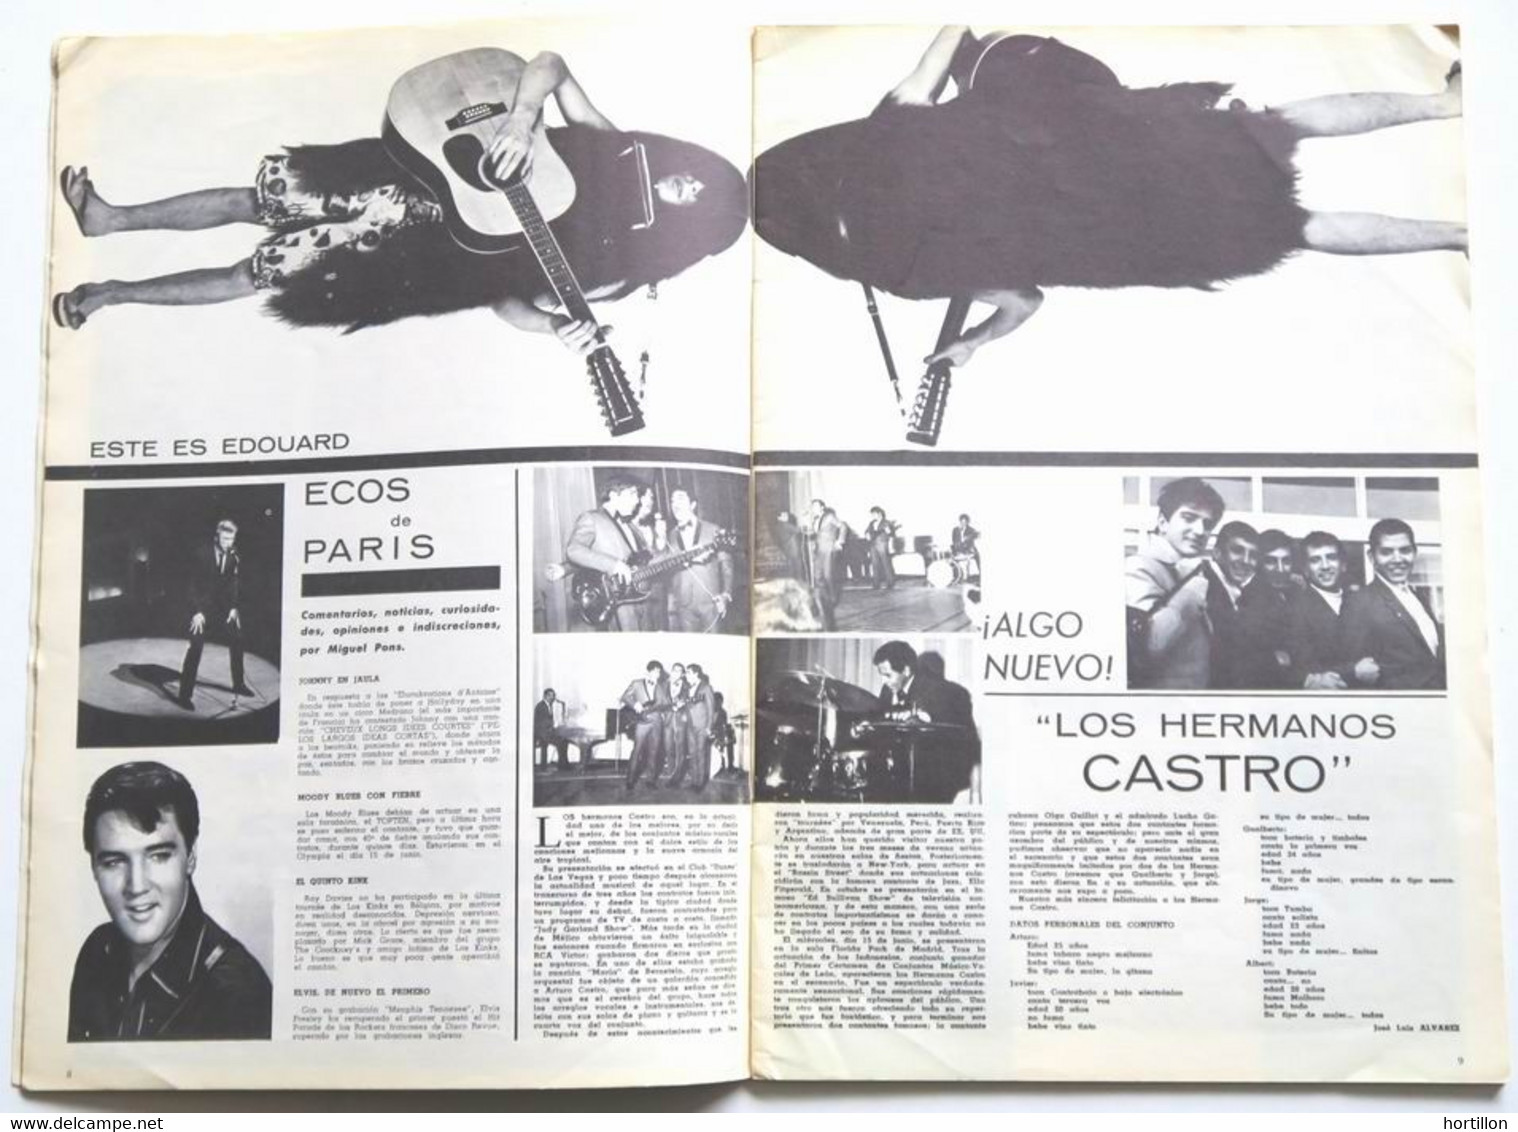 Revue Espagne FONORAMA N° 30 Juillet 1966 ROLLING STONES / PRETTY THINKS / KINKS / PATRICIA CARLI - [4] Themen